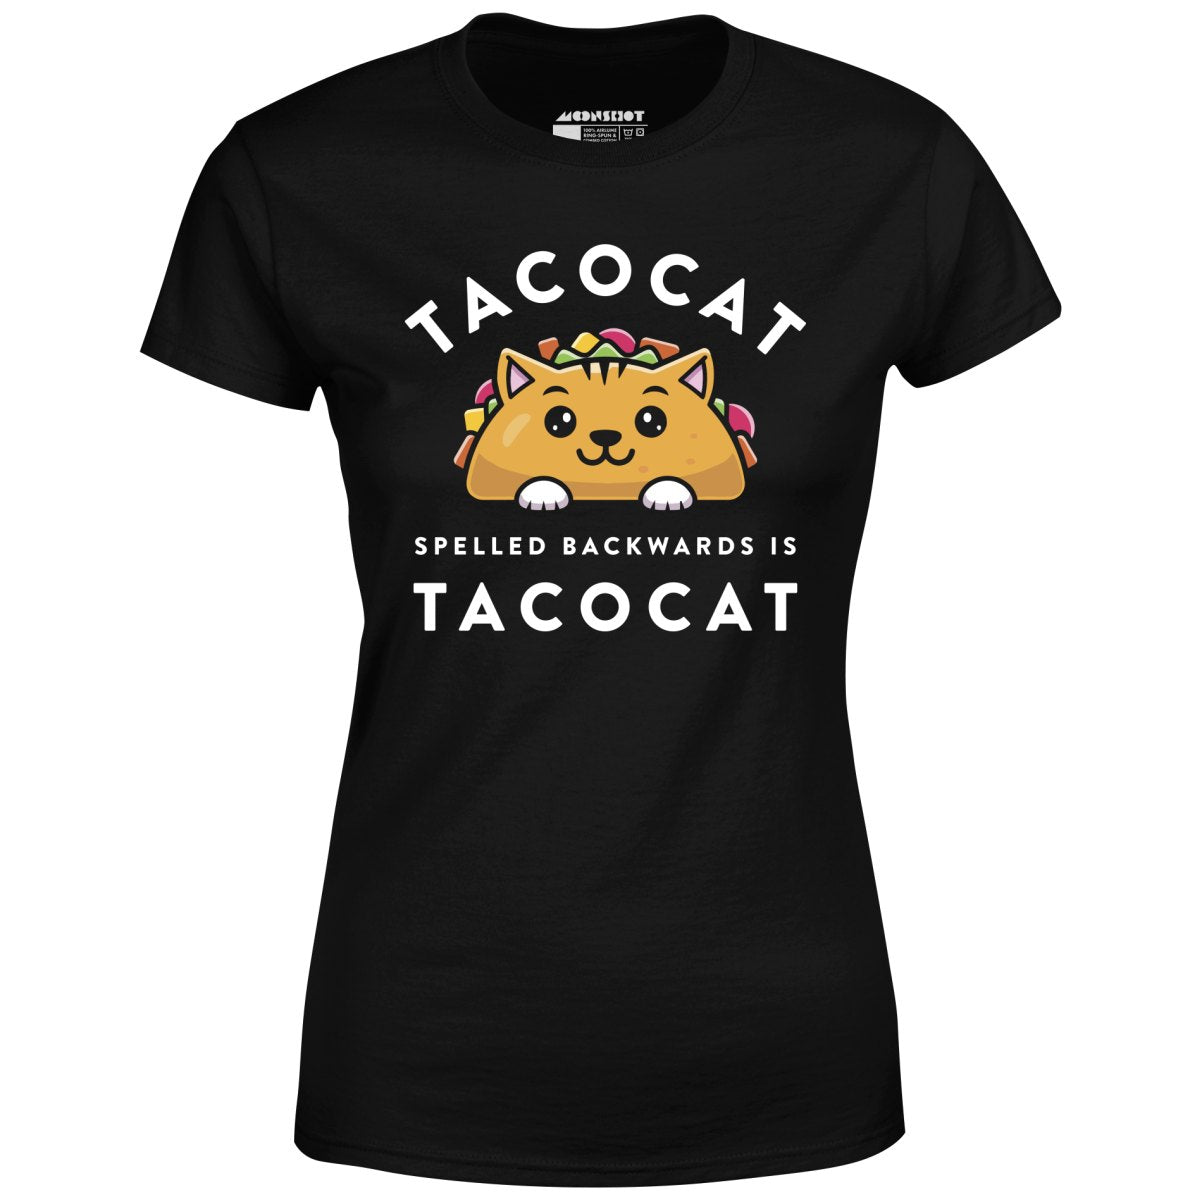 Tacocat Spelled Backwards - Women's T-Shirt